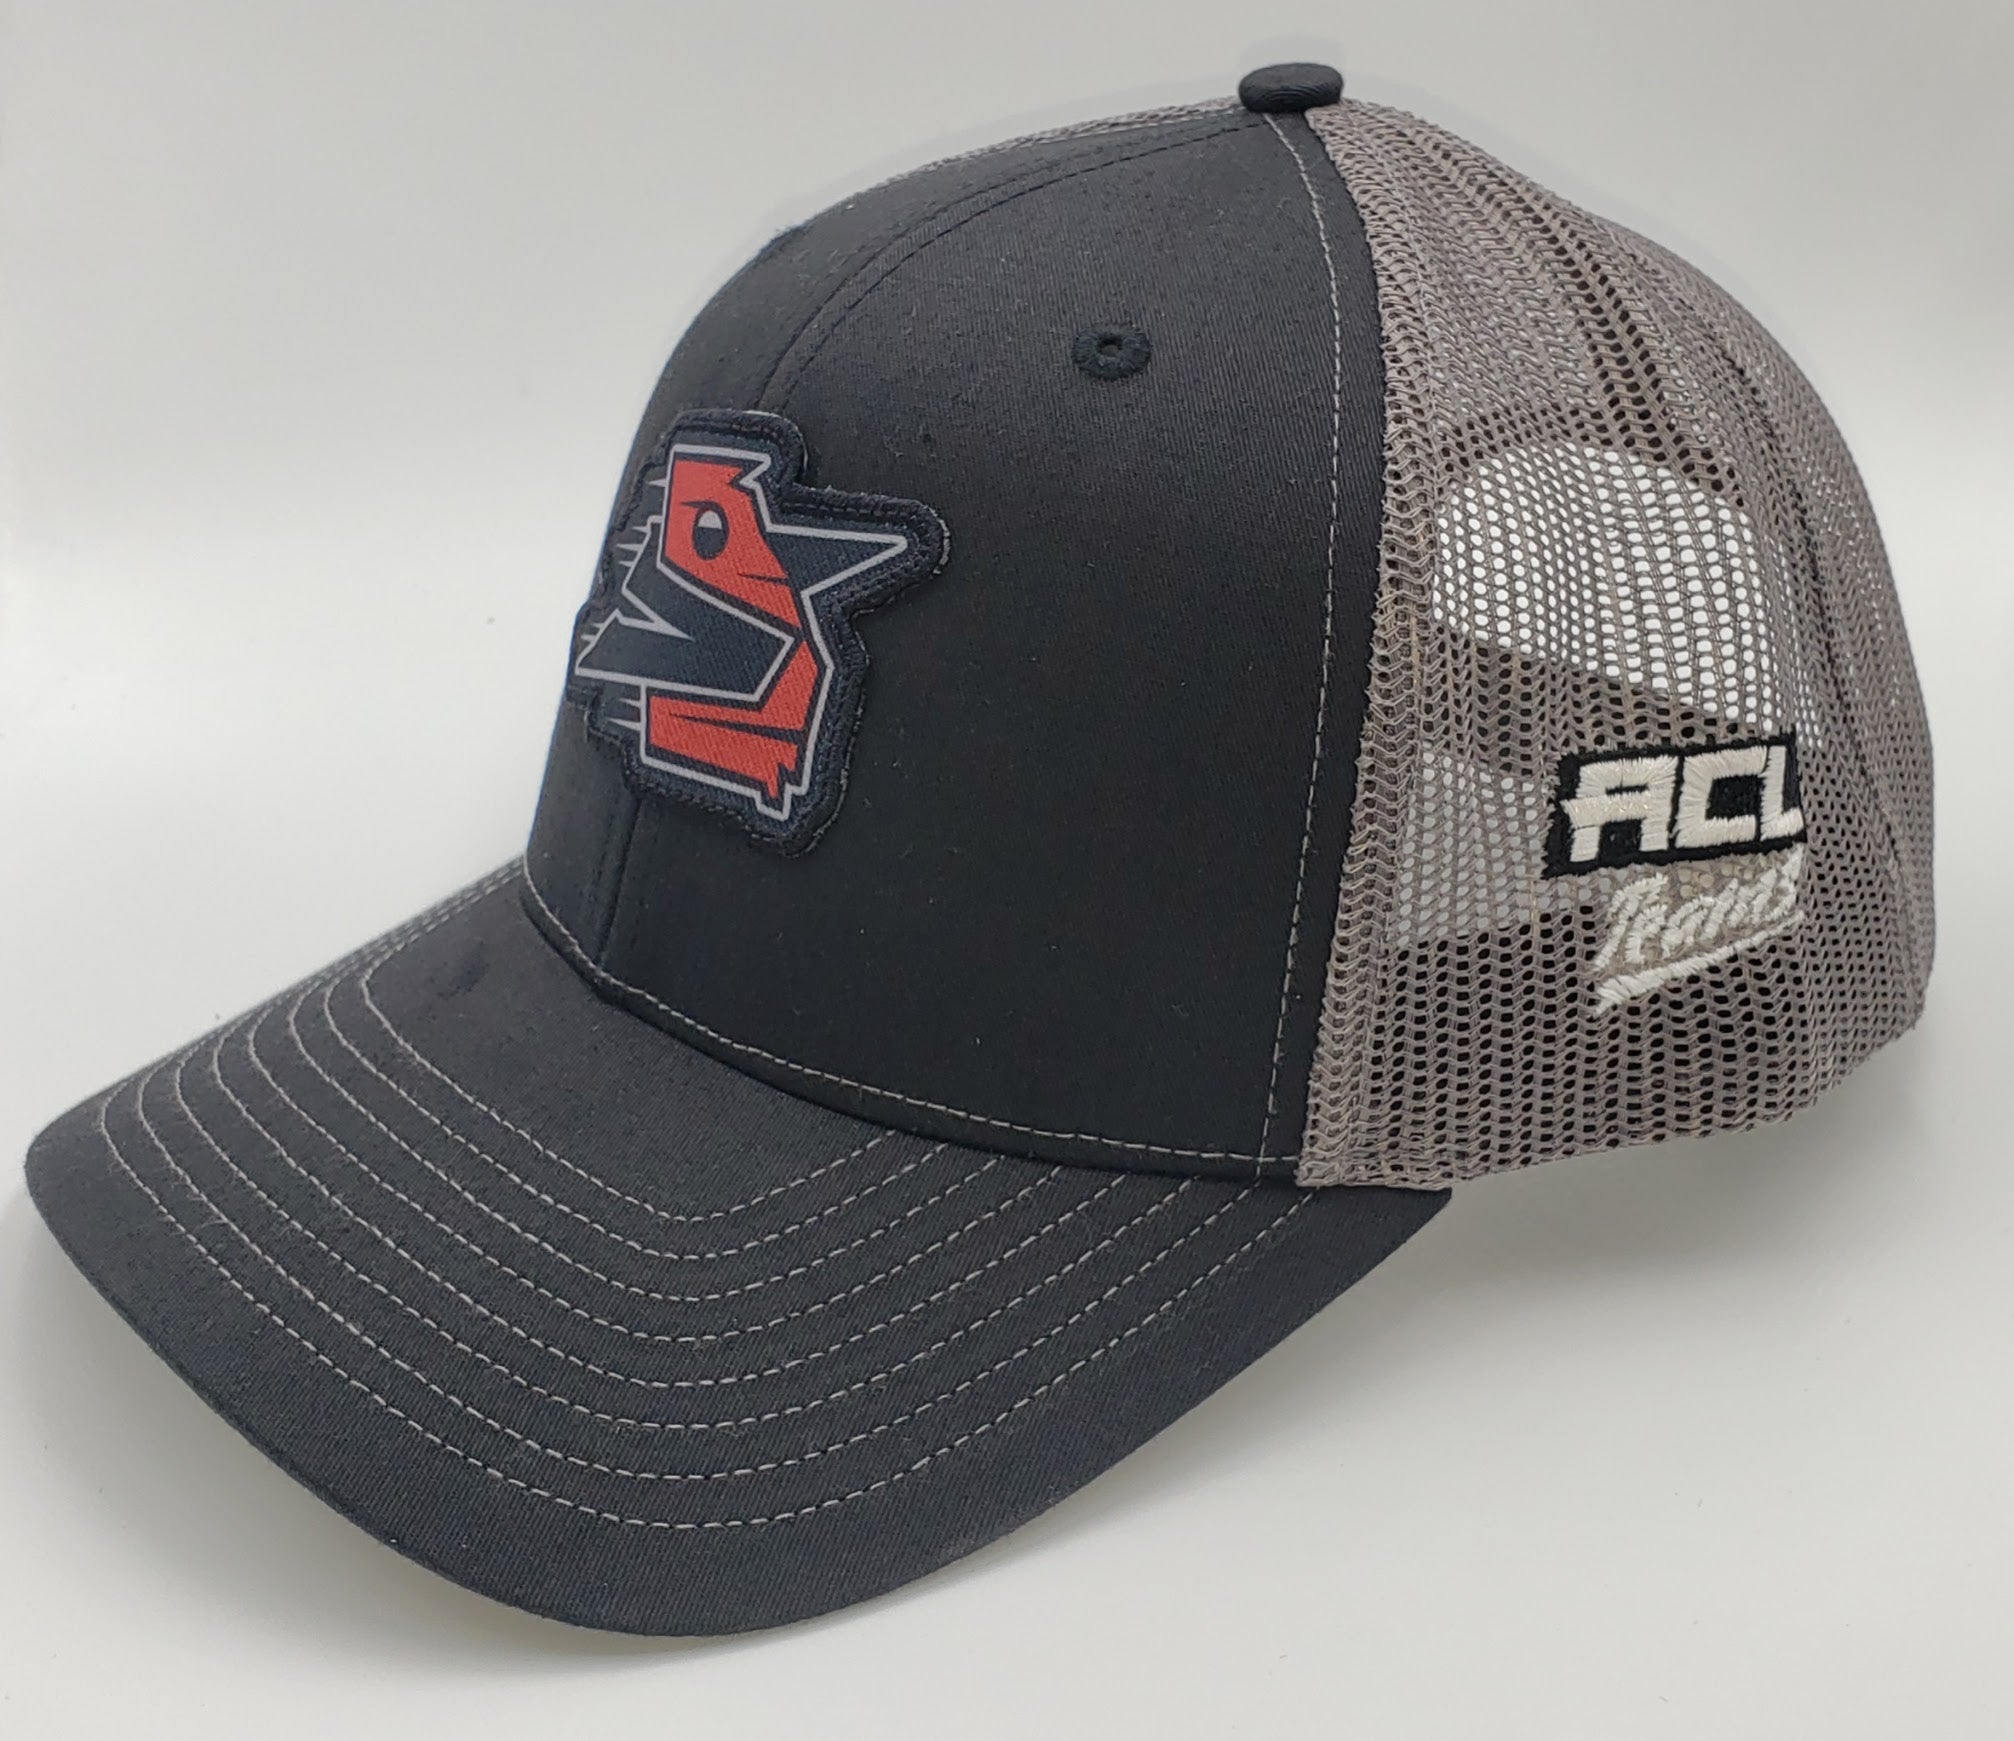 ACL Teams Hats - Georgia Sliders